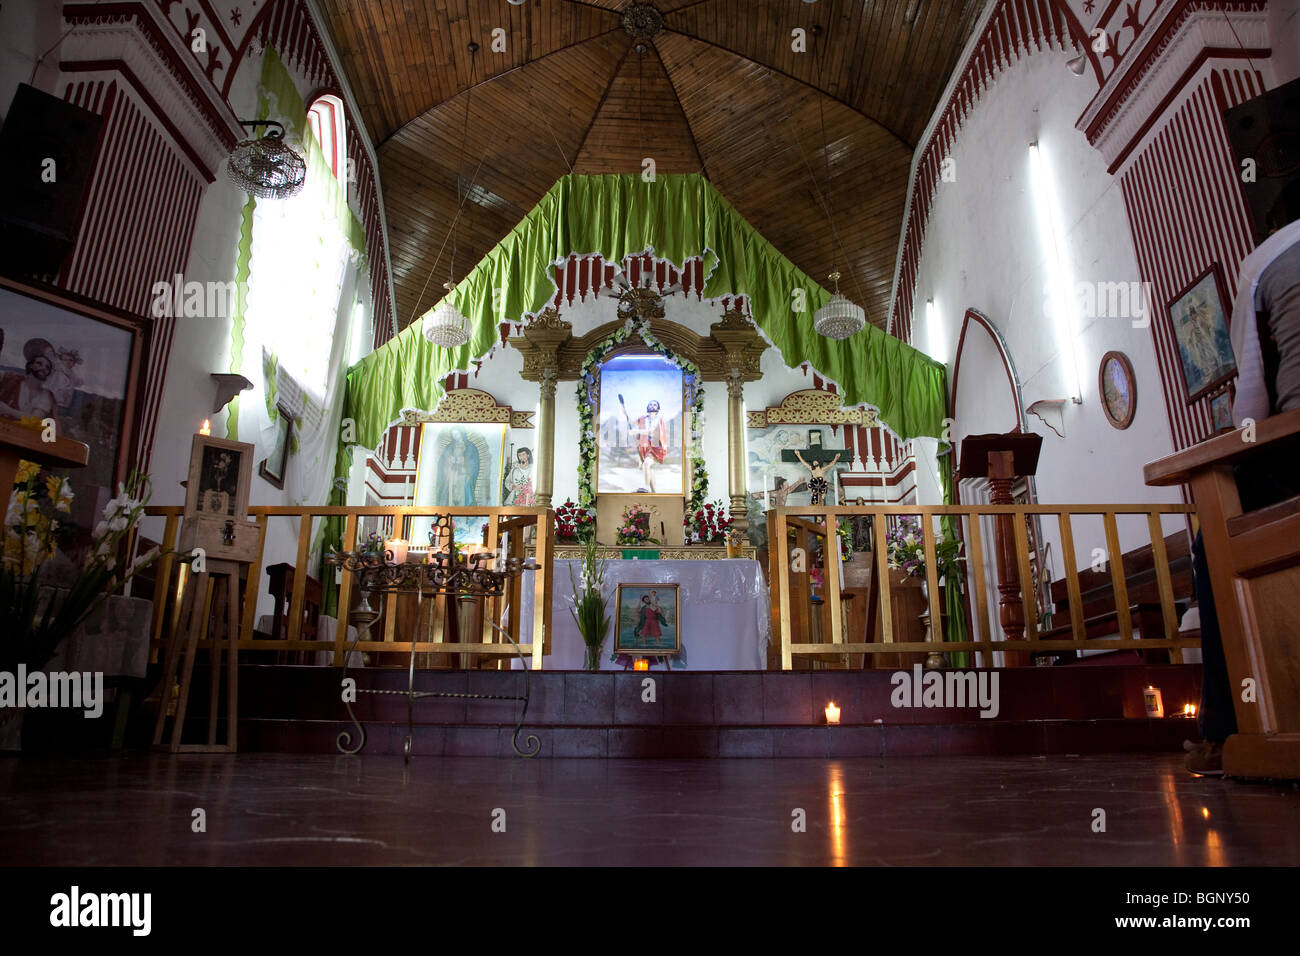 Iglesia del cerrito hi-res stock photography and images - Alamy